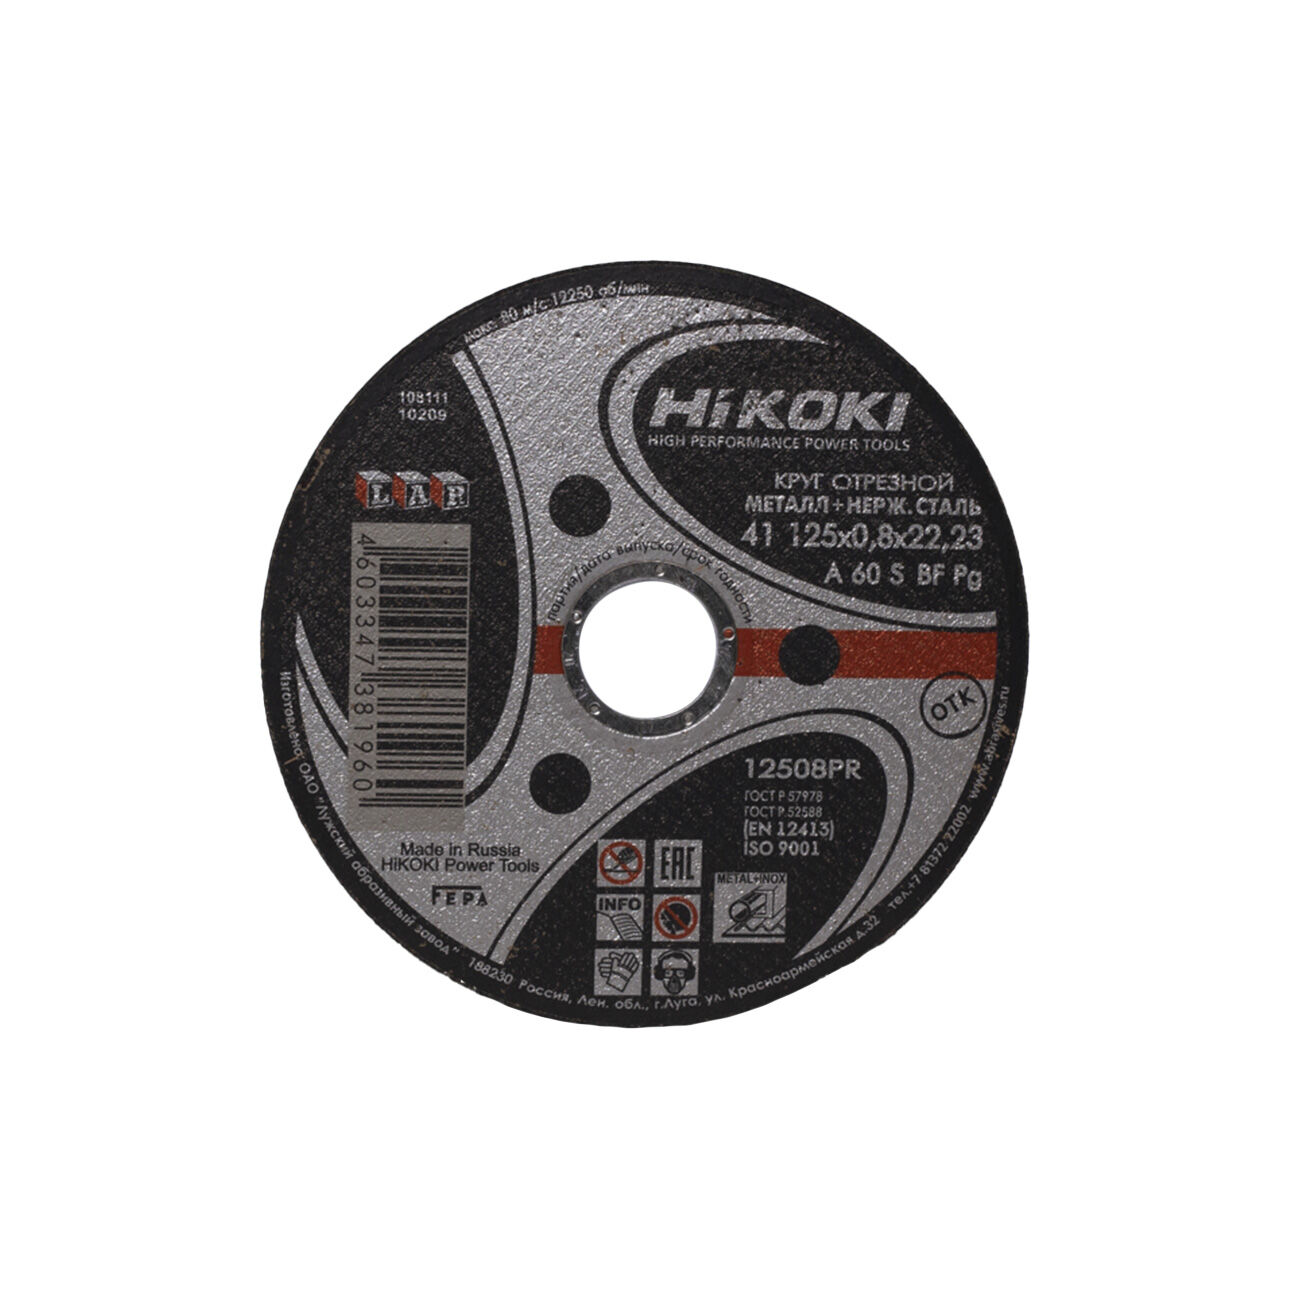 Круг отрезной по металлу 41 125x0,8x22,23 A 60 HiKoki HITACHI